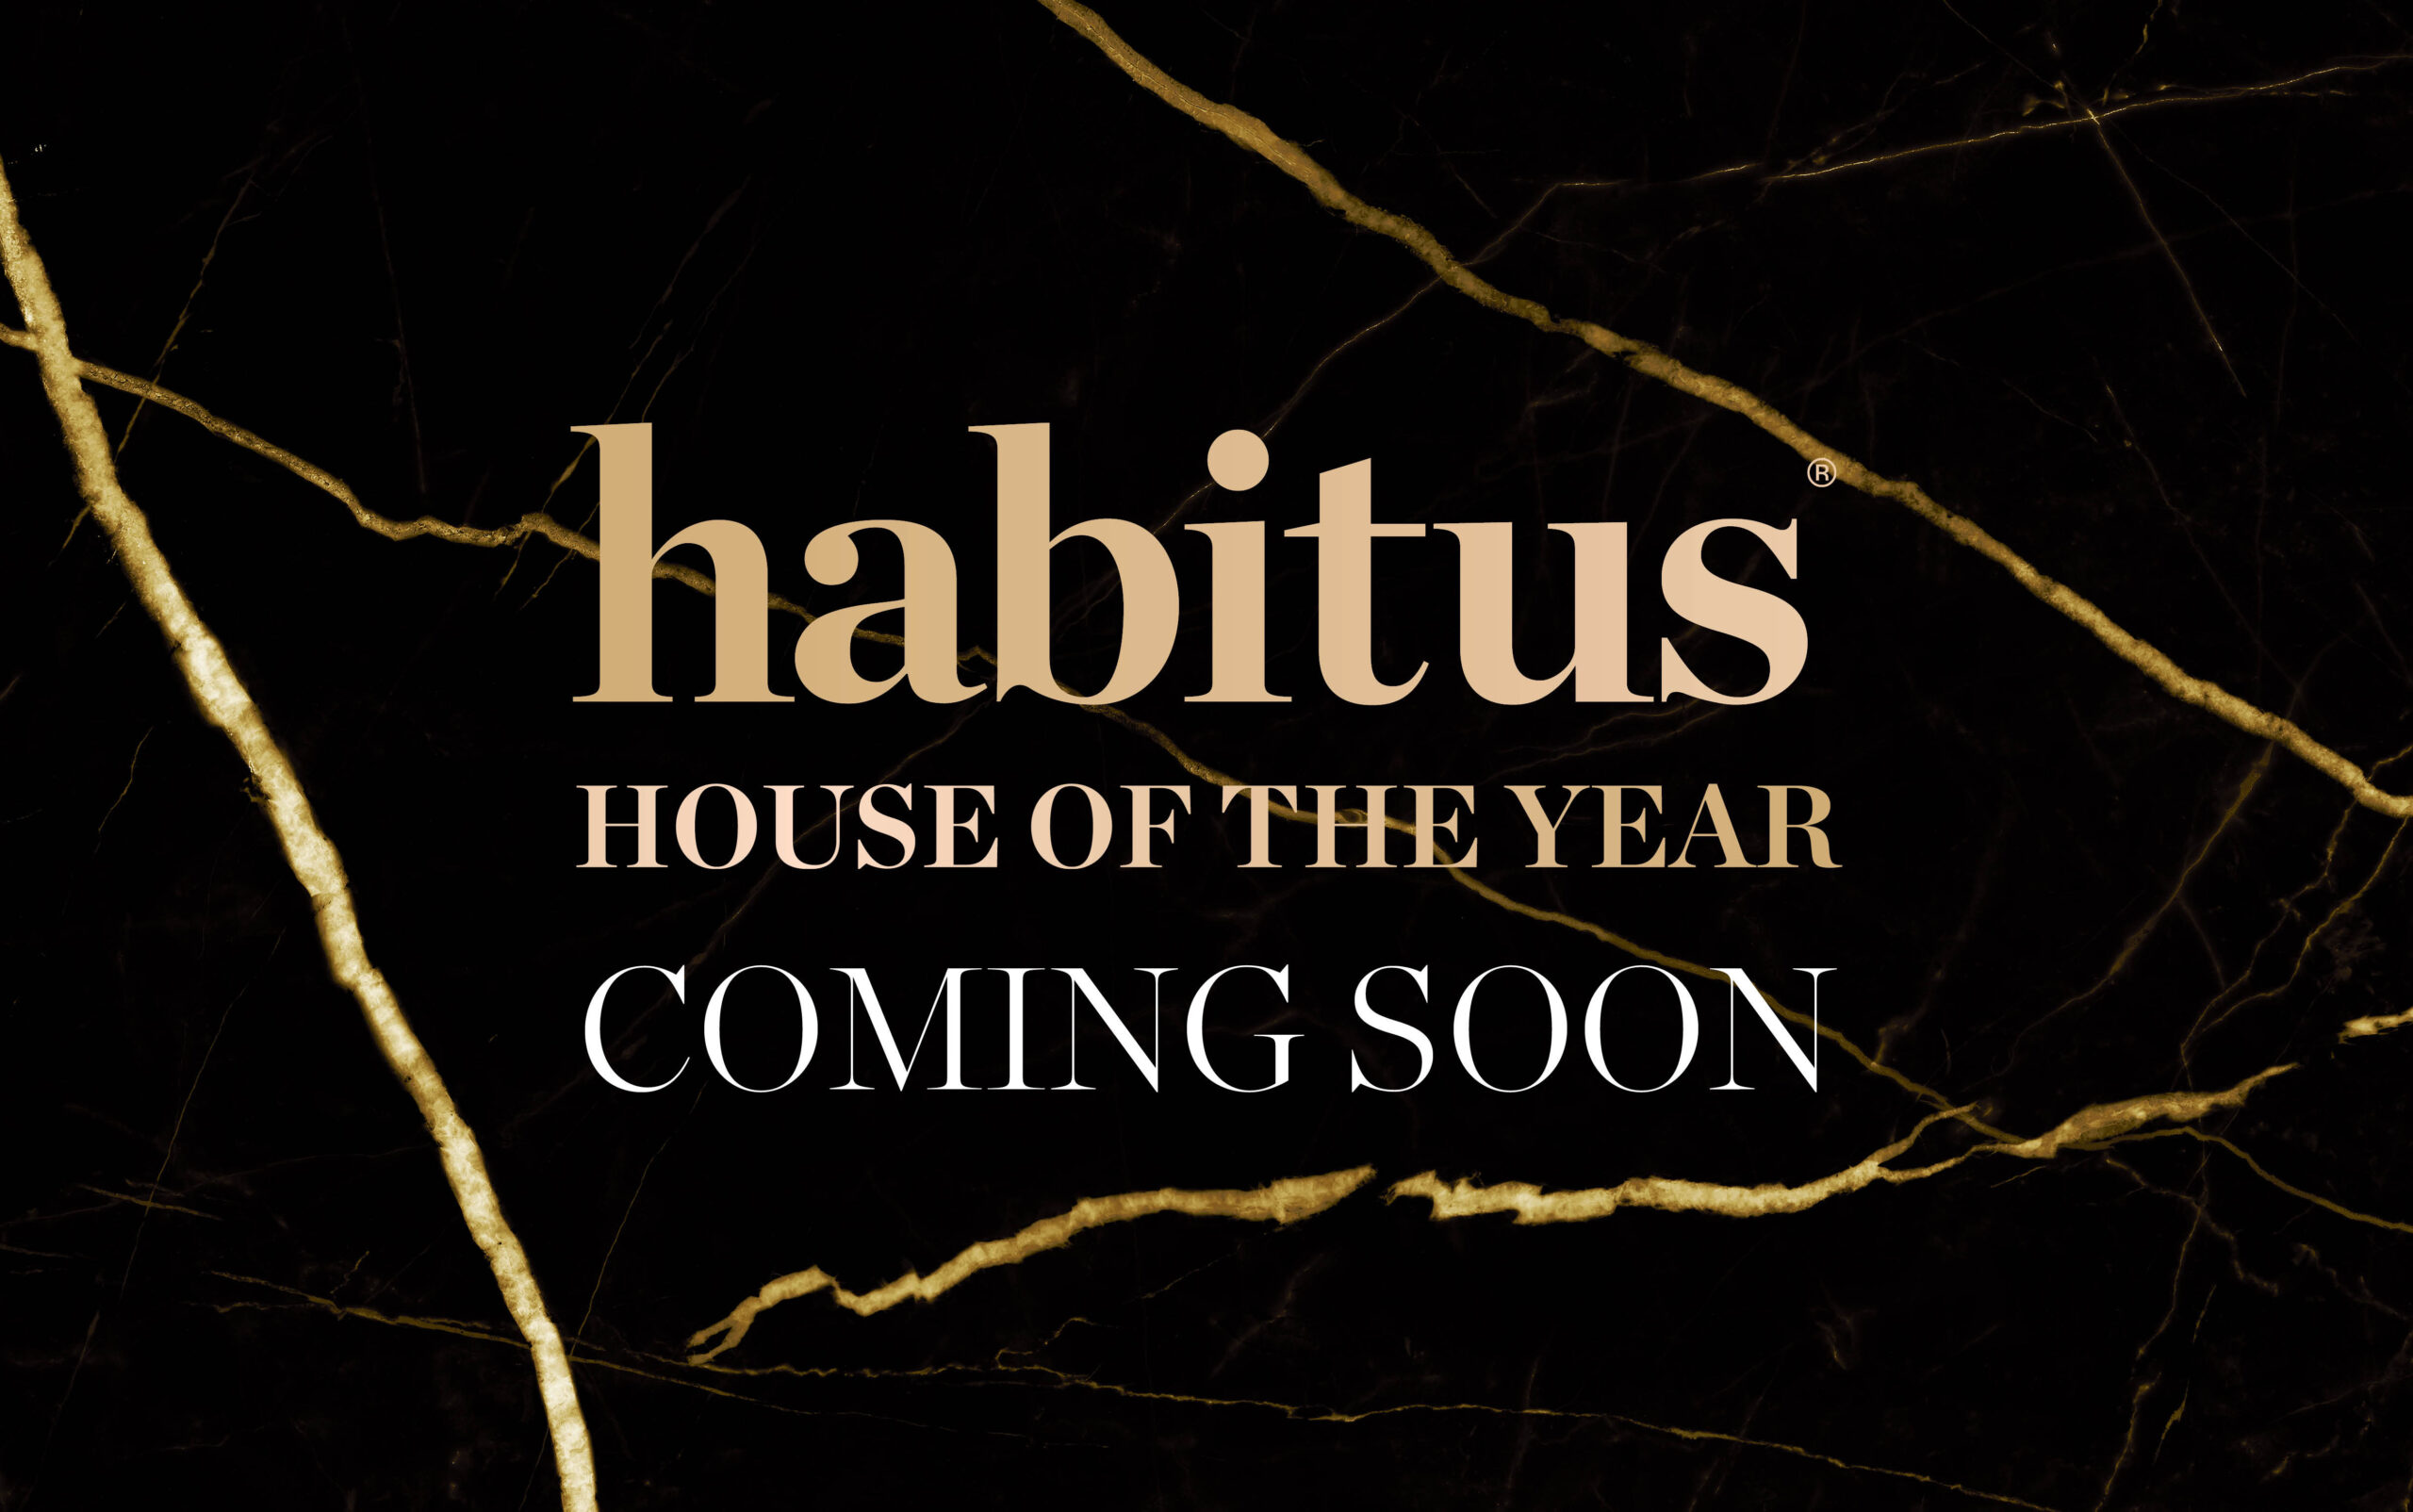 Habitus House of the Year returns soon…